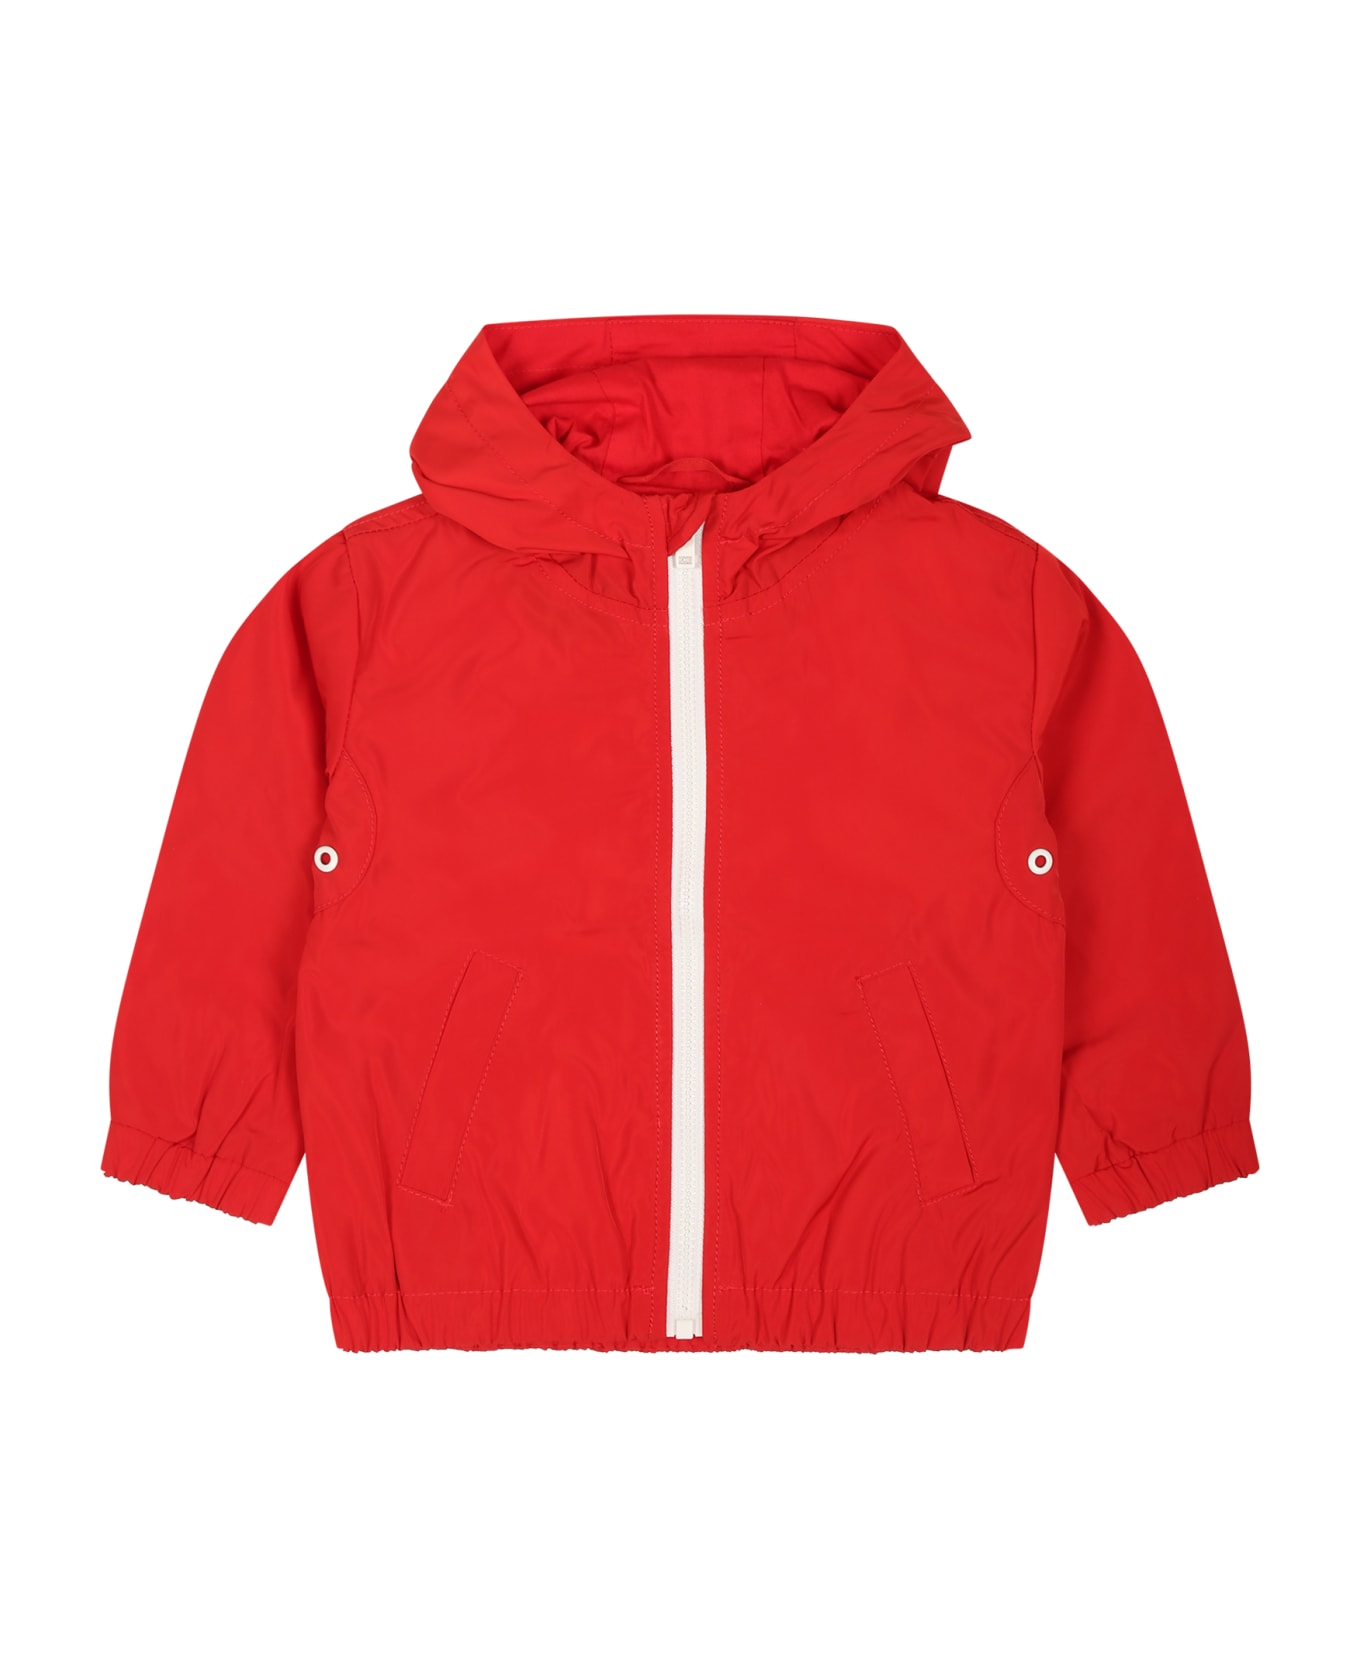 Diesel Red Wind Jacket For Baby Kids - Red